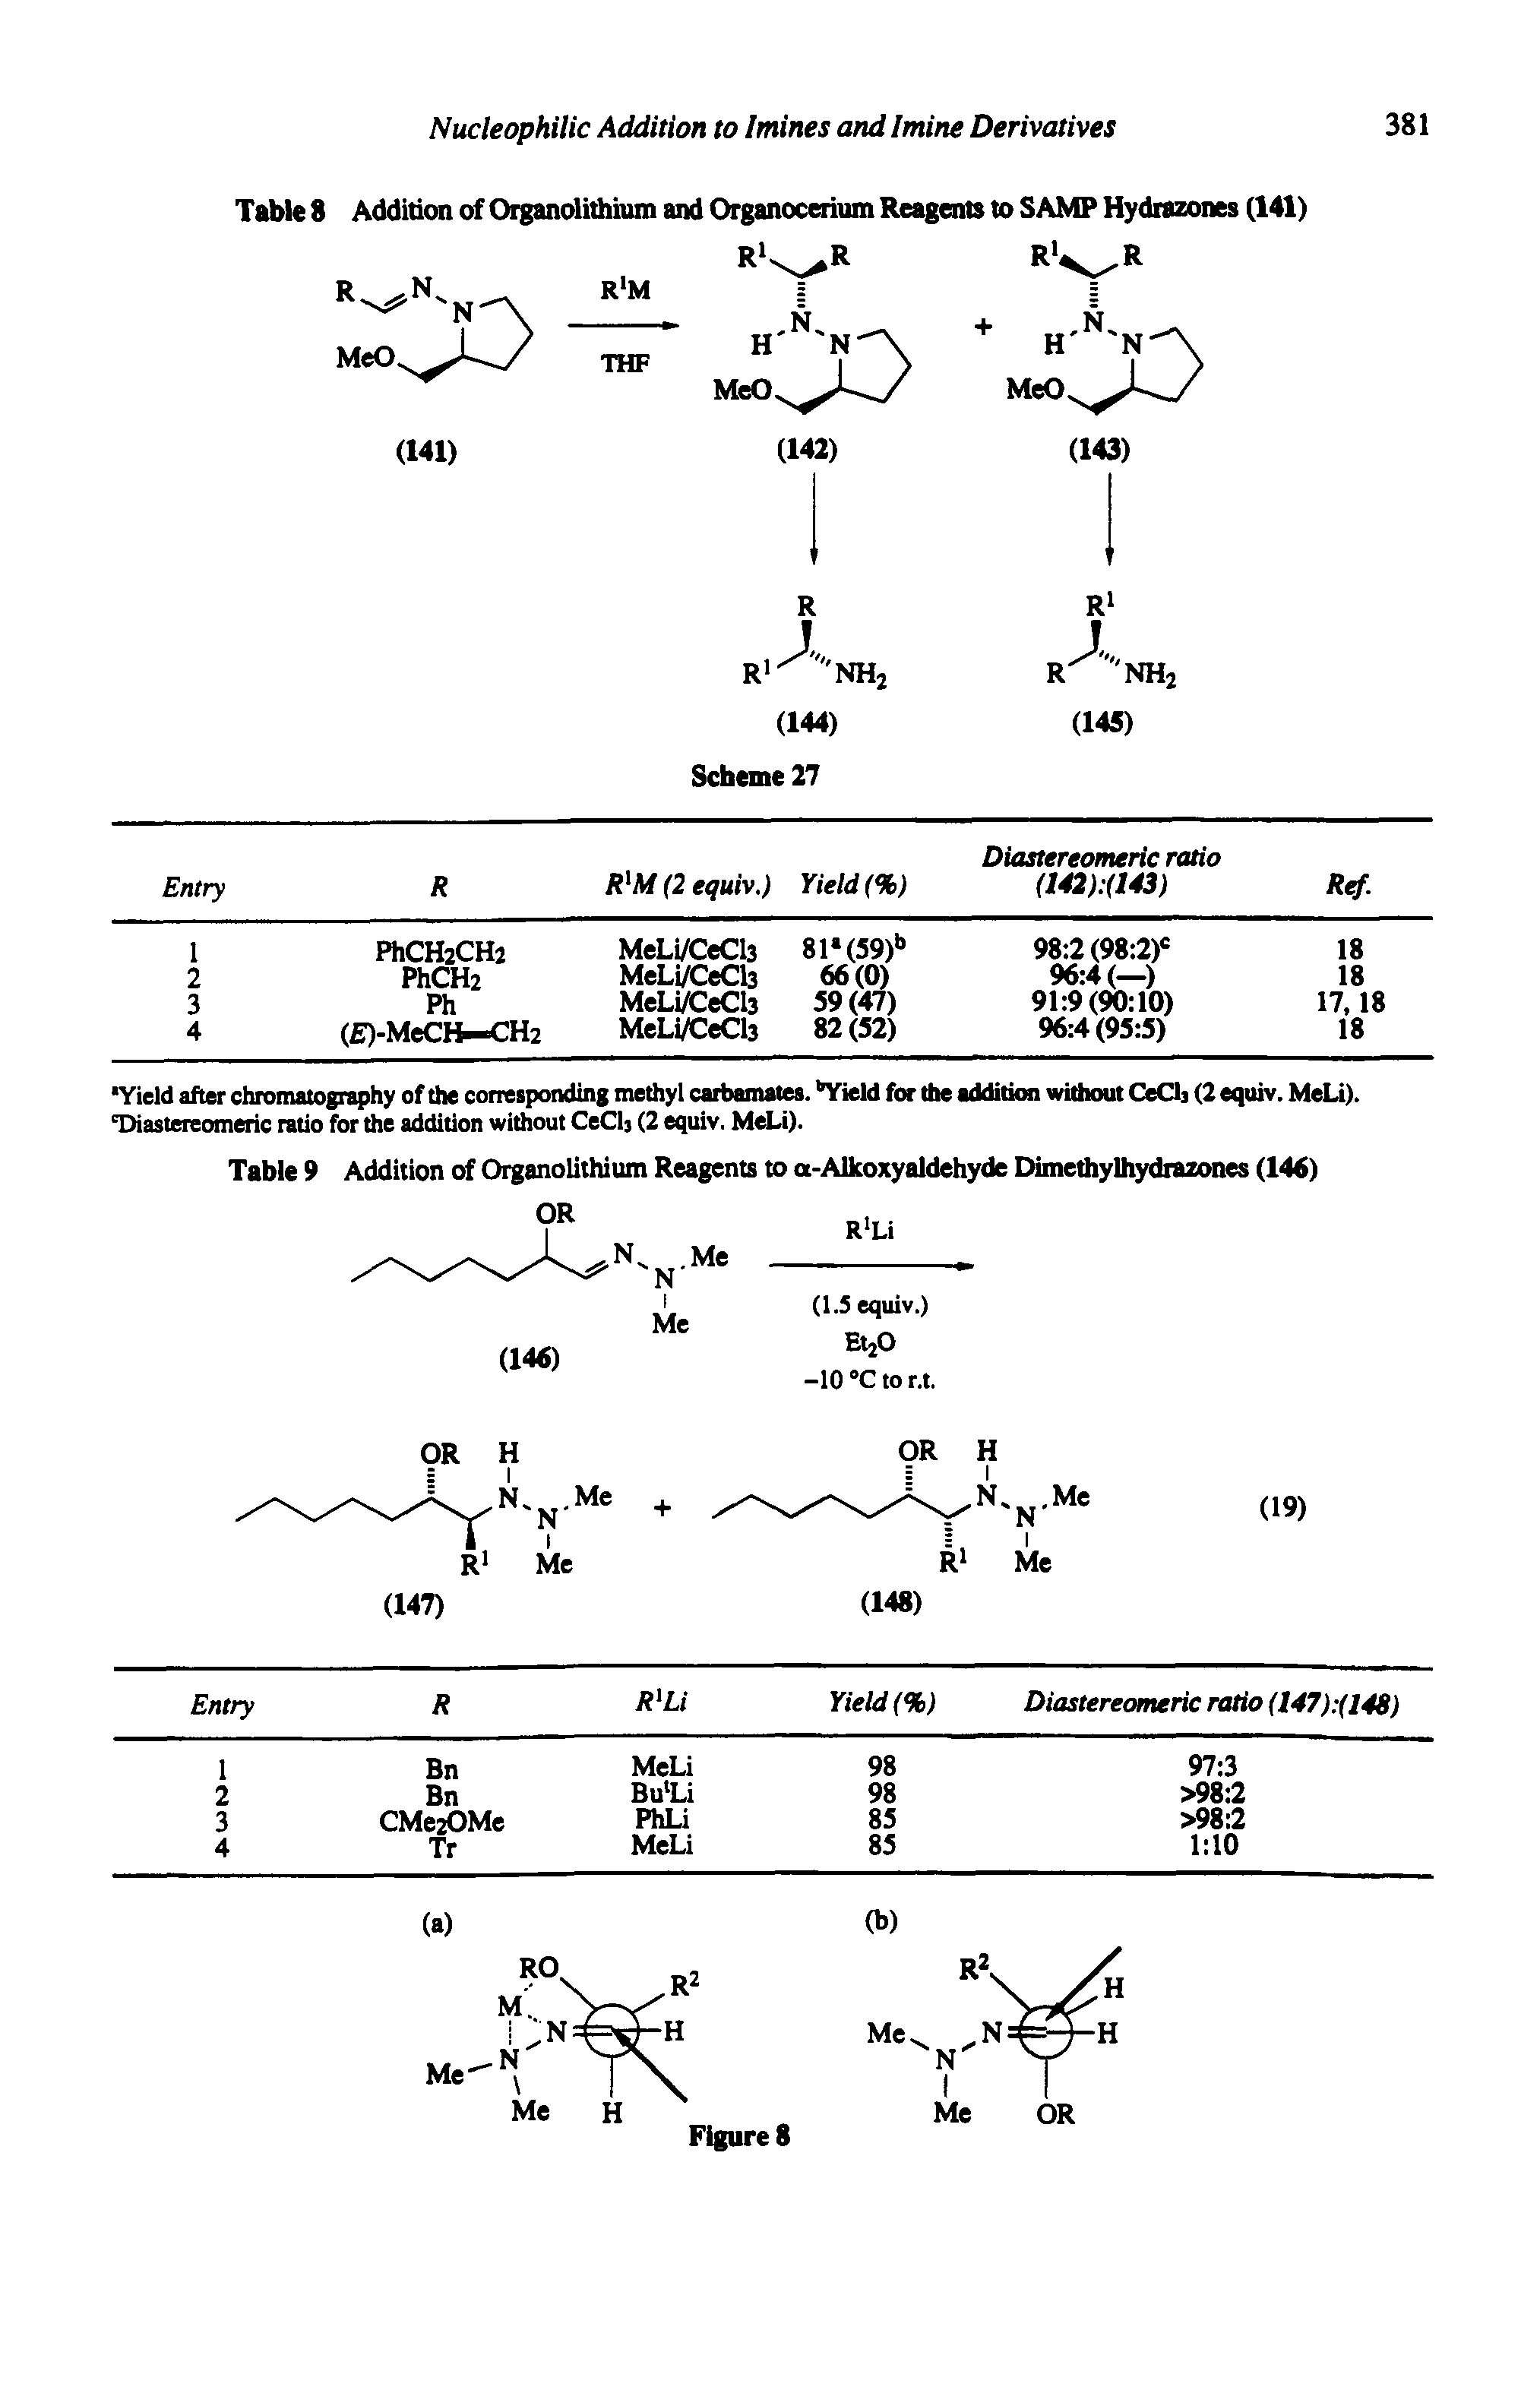 Table 9 Addition of Organolithium Reagents to a-Alkoxyaldehyde Dimethylhydiazones (144)...